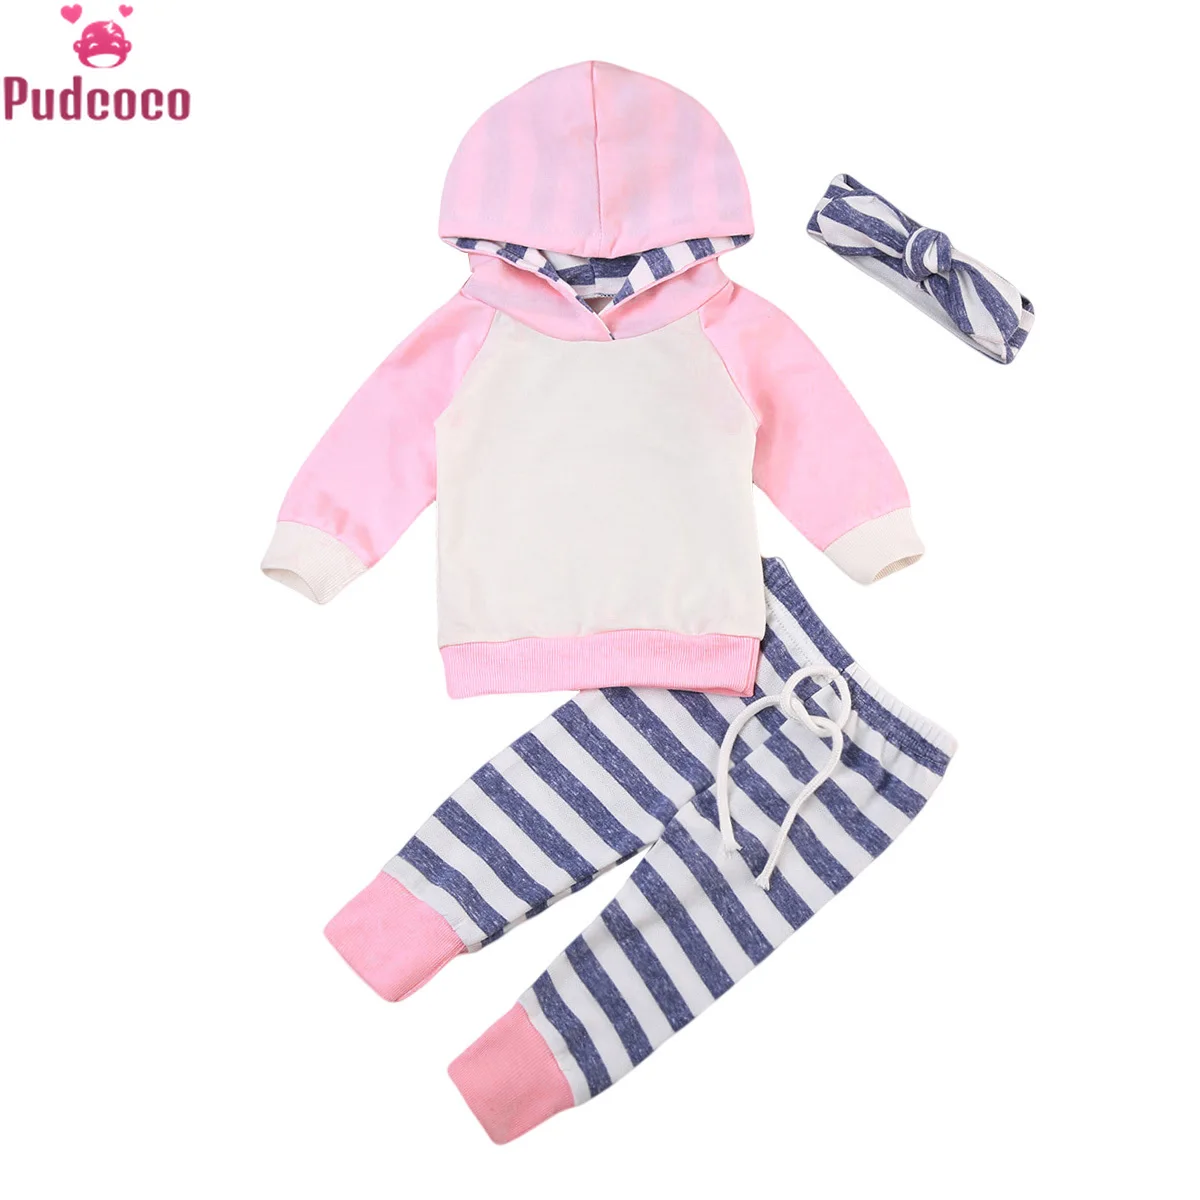 

Pudcoco Fall Winter 3 PCS New born Baby Boy Clothes Set Girl Hooded Sweatshirt Striped Leggings Pants Outfits Clothing Bebe Set